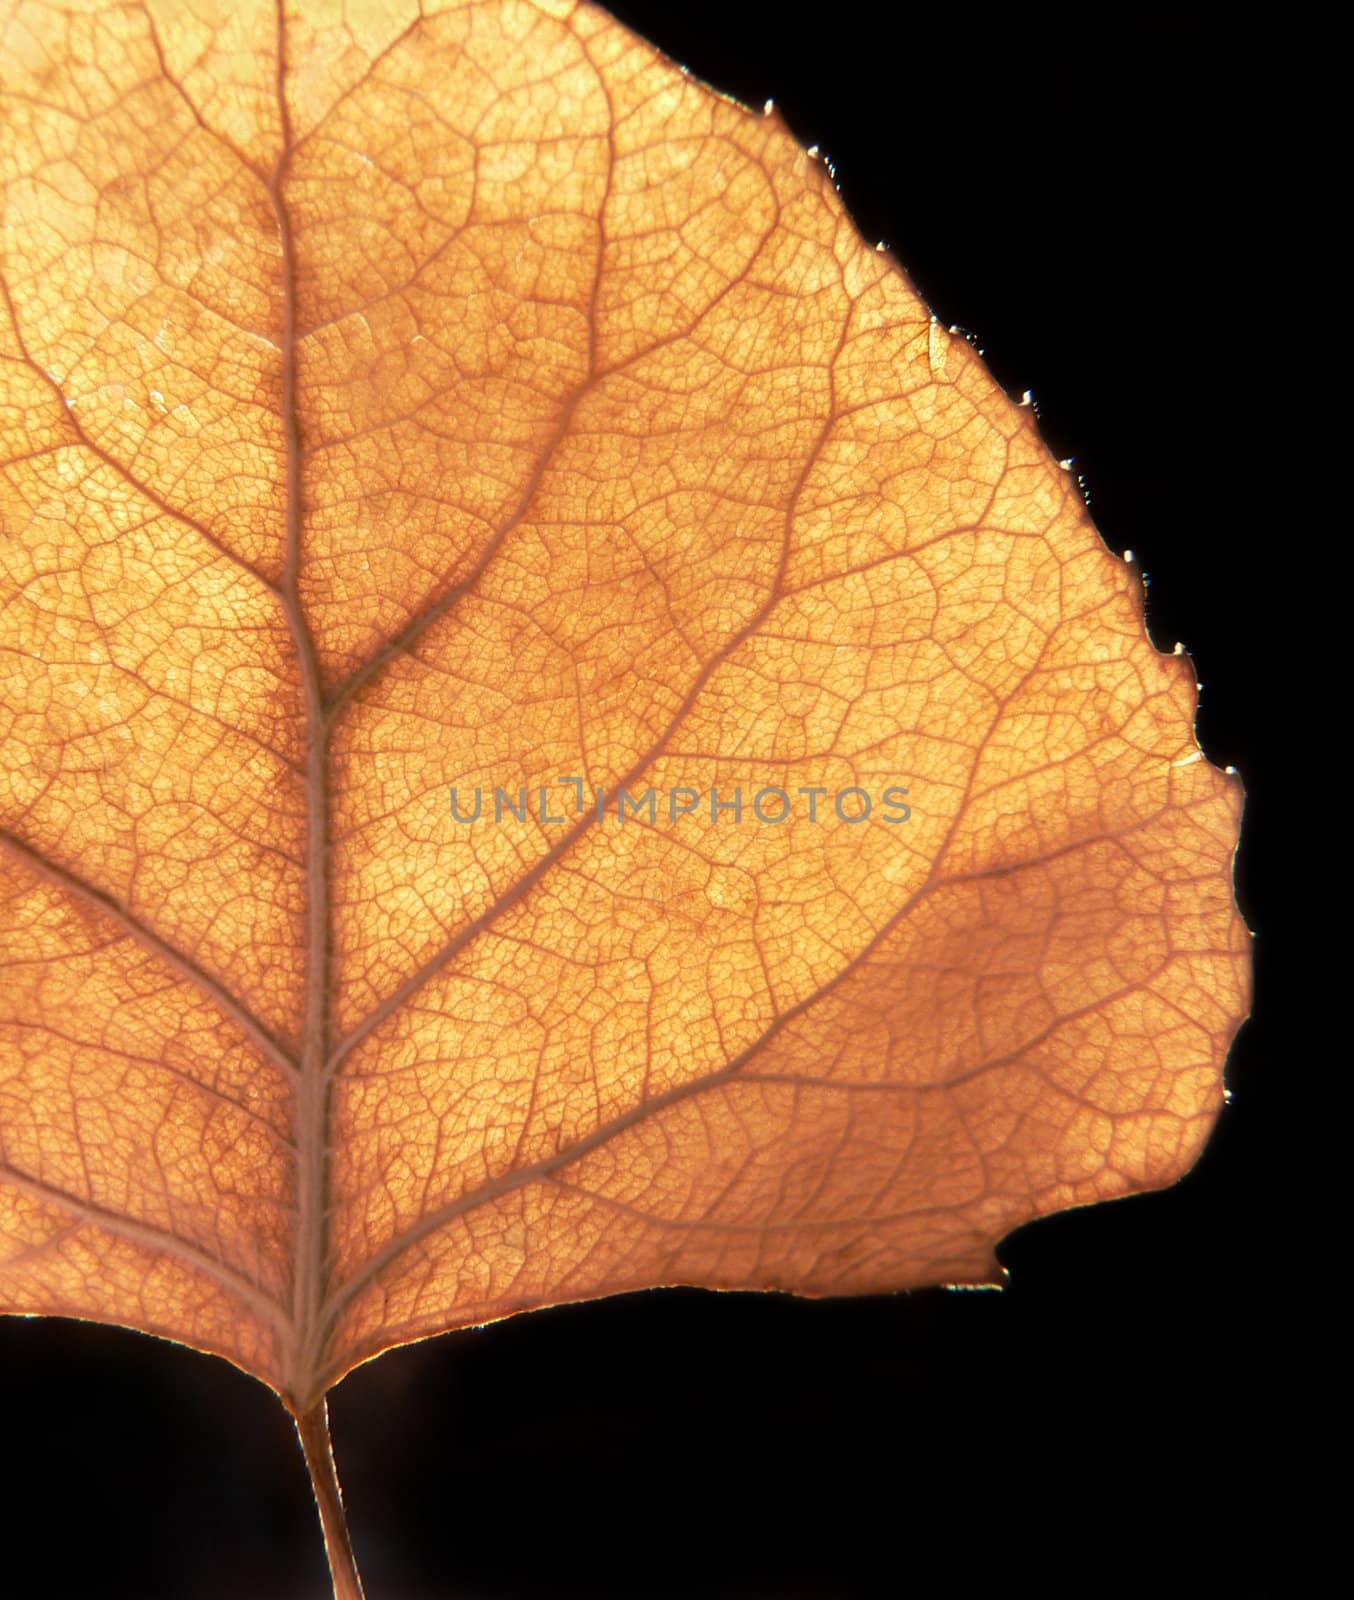 Transparent Leaf by telecast